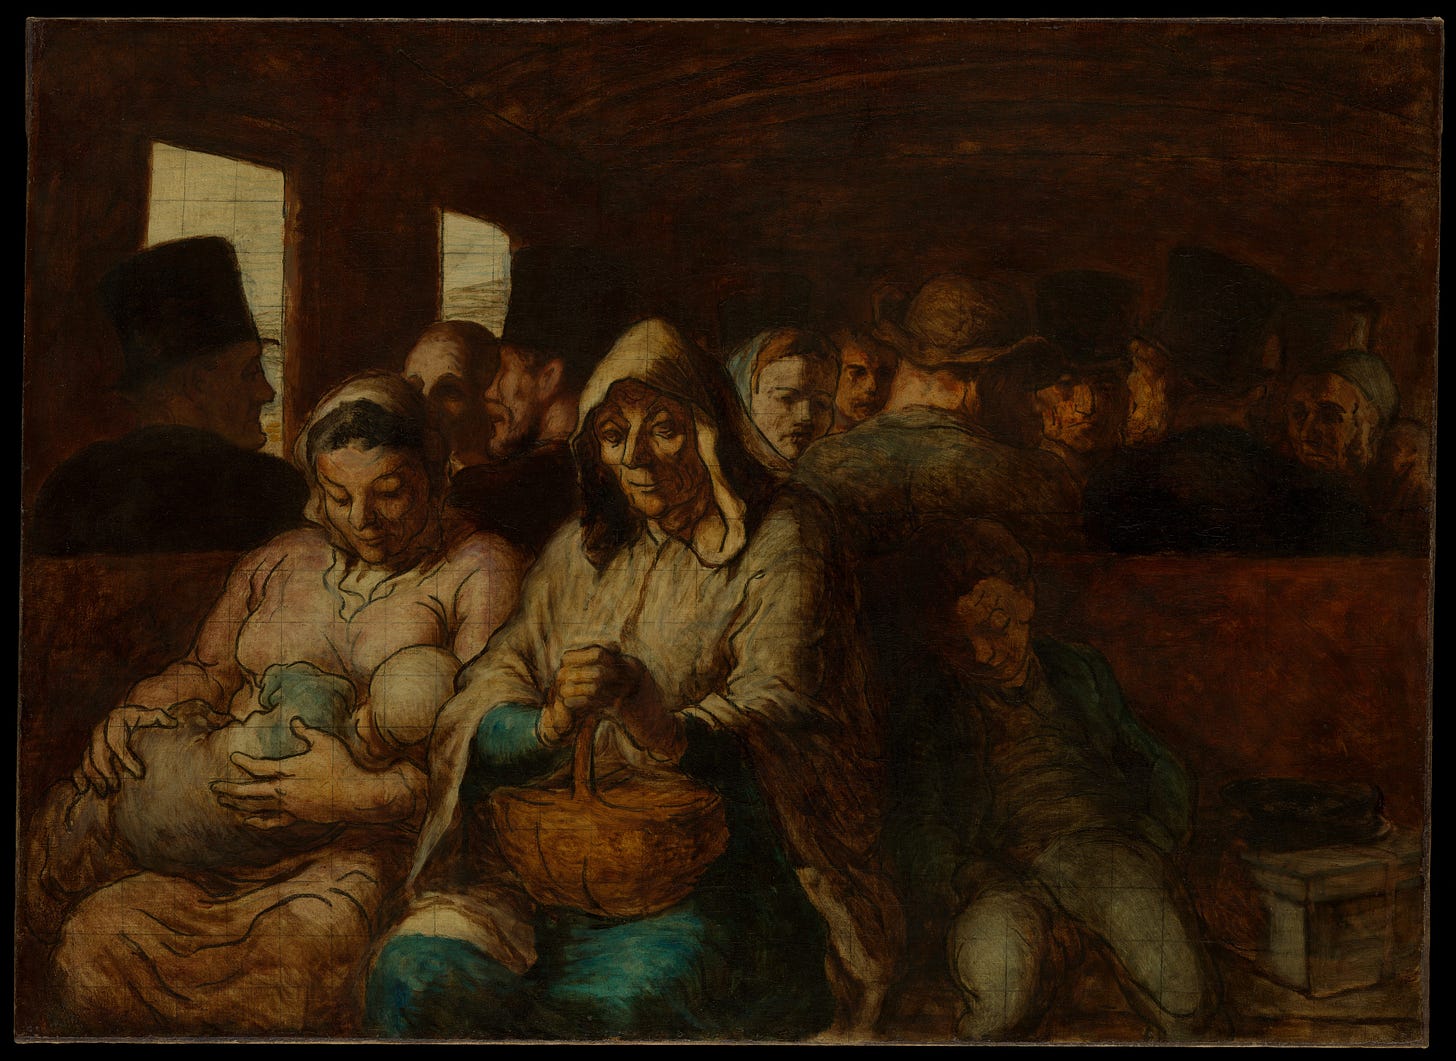 Honoré Daumier | The Third-Class Carriage | The Metropolitan Museum of Art